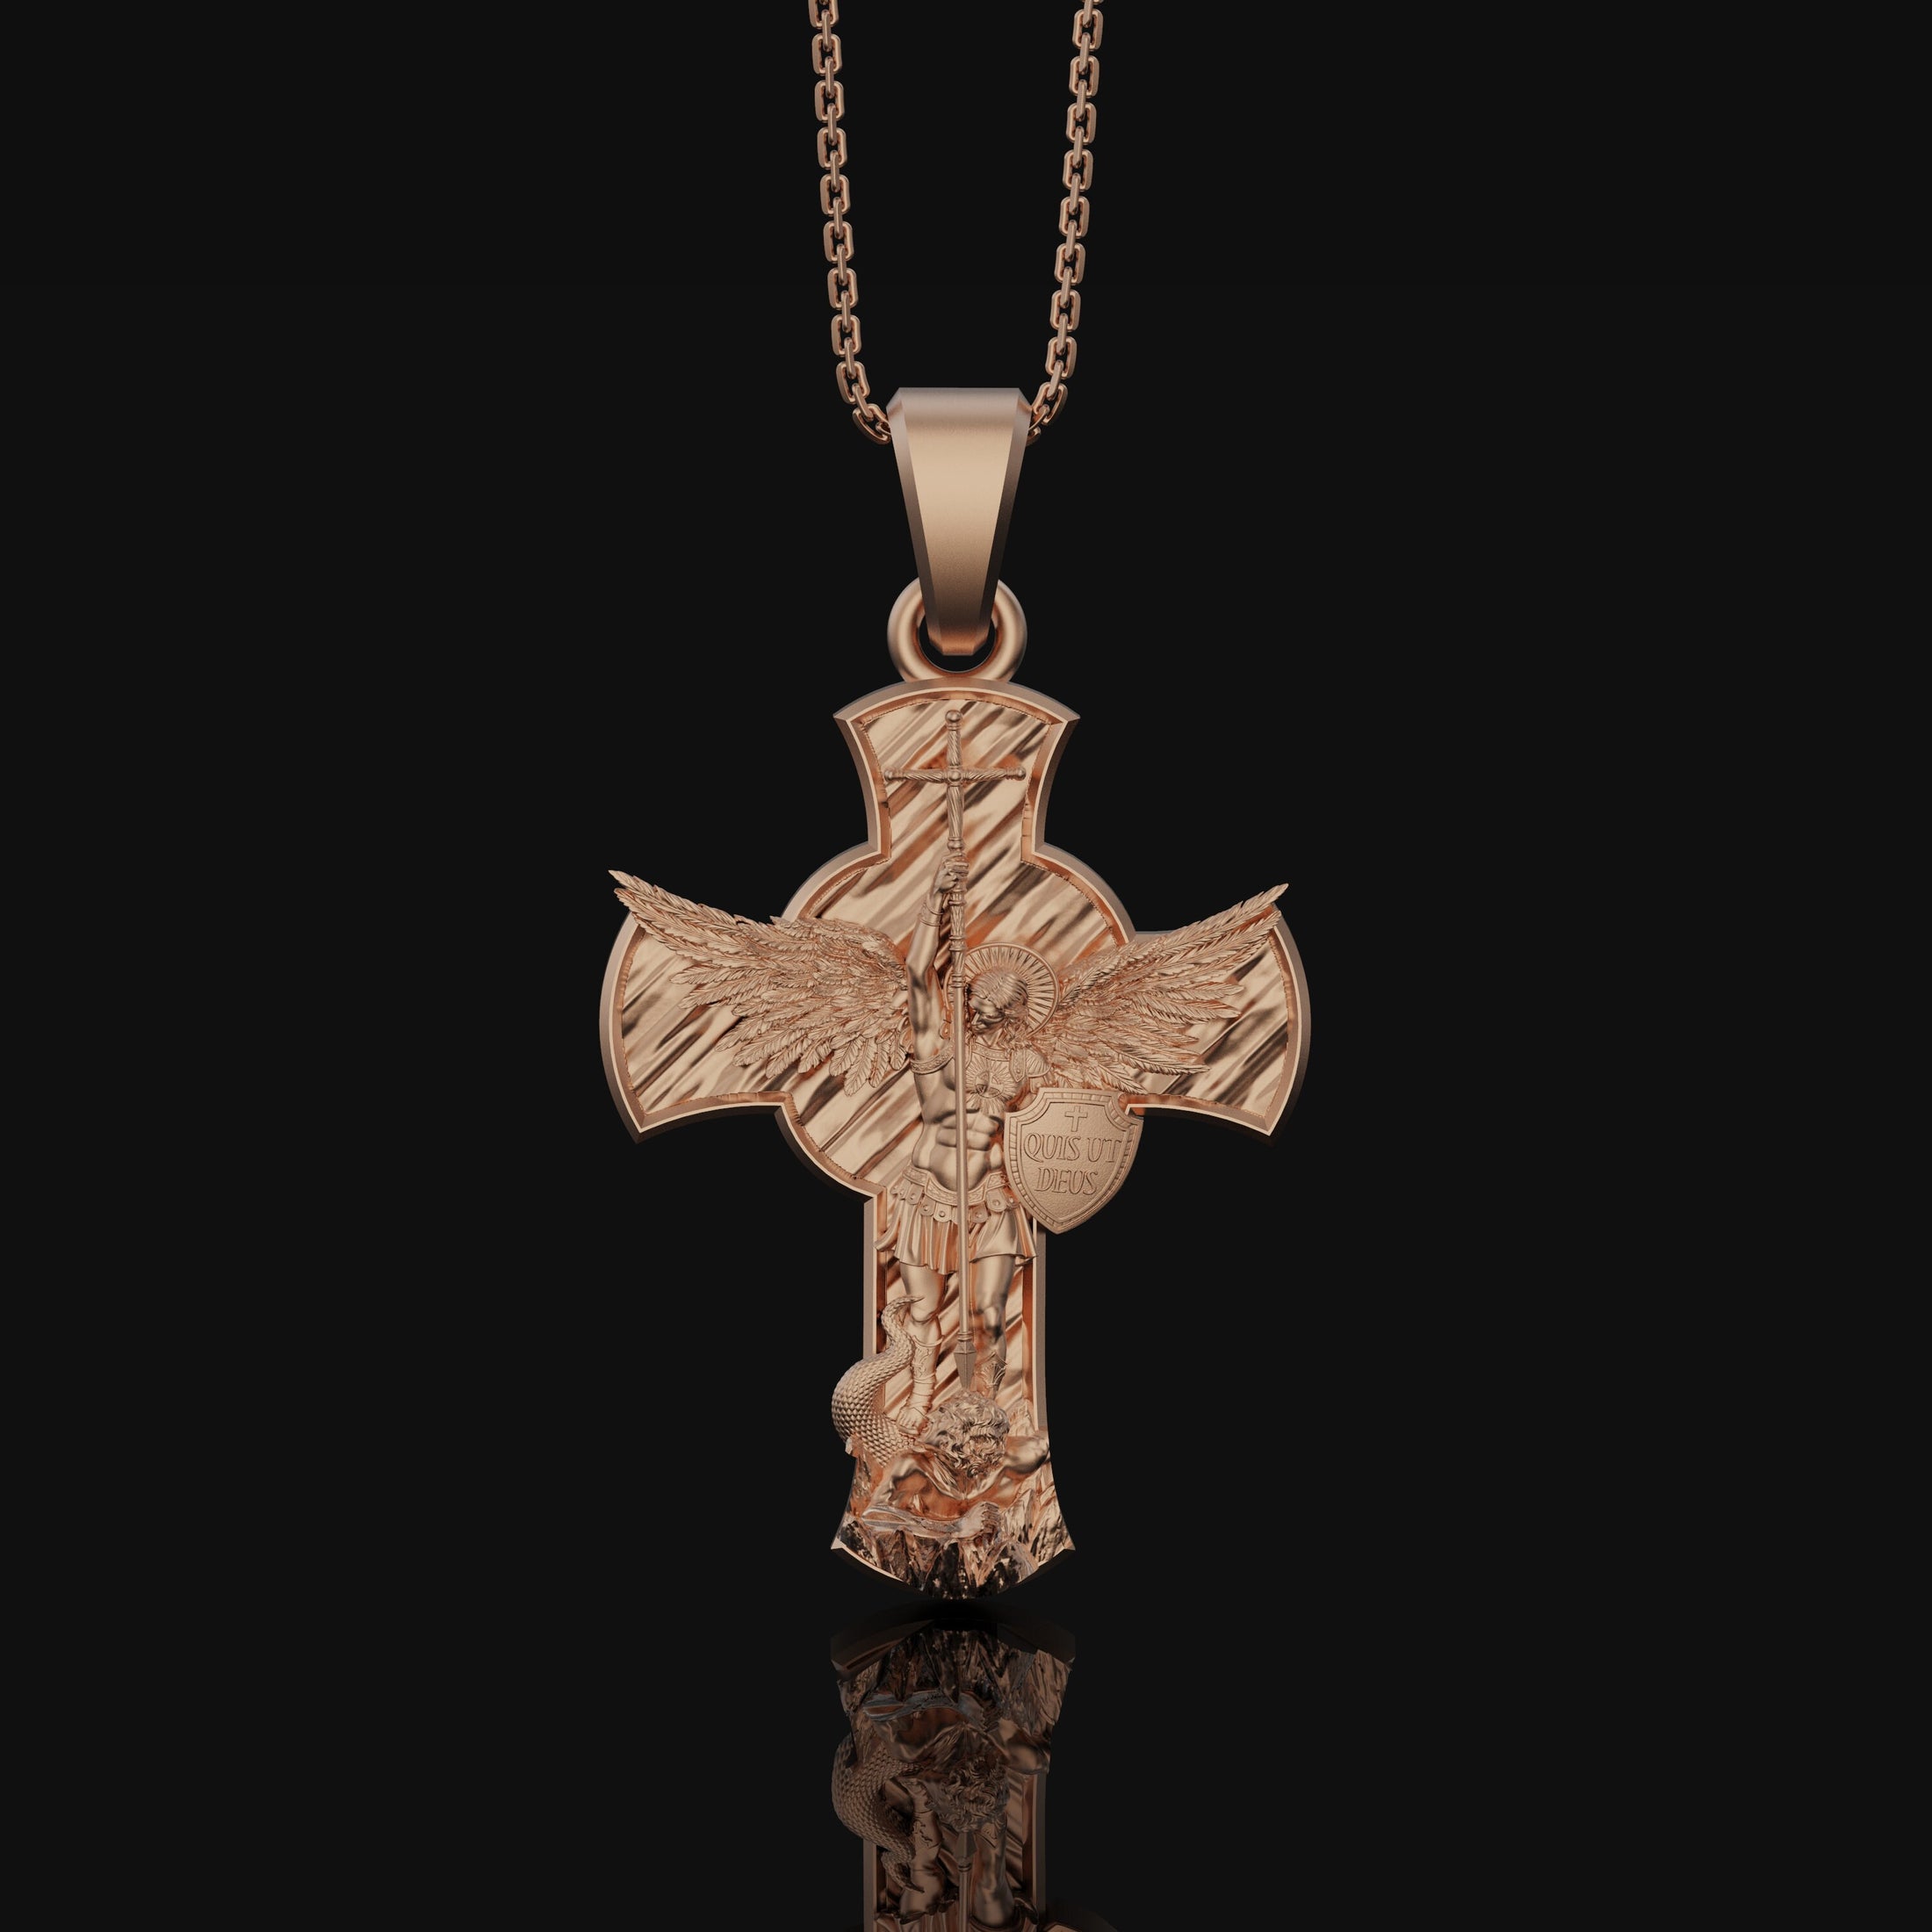 St Archangel Michael Pendant Satan, Michael Defeating Satan, Religious Jewelry, Christian Necklace, Guardian Angel Gift